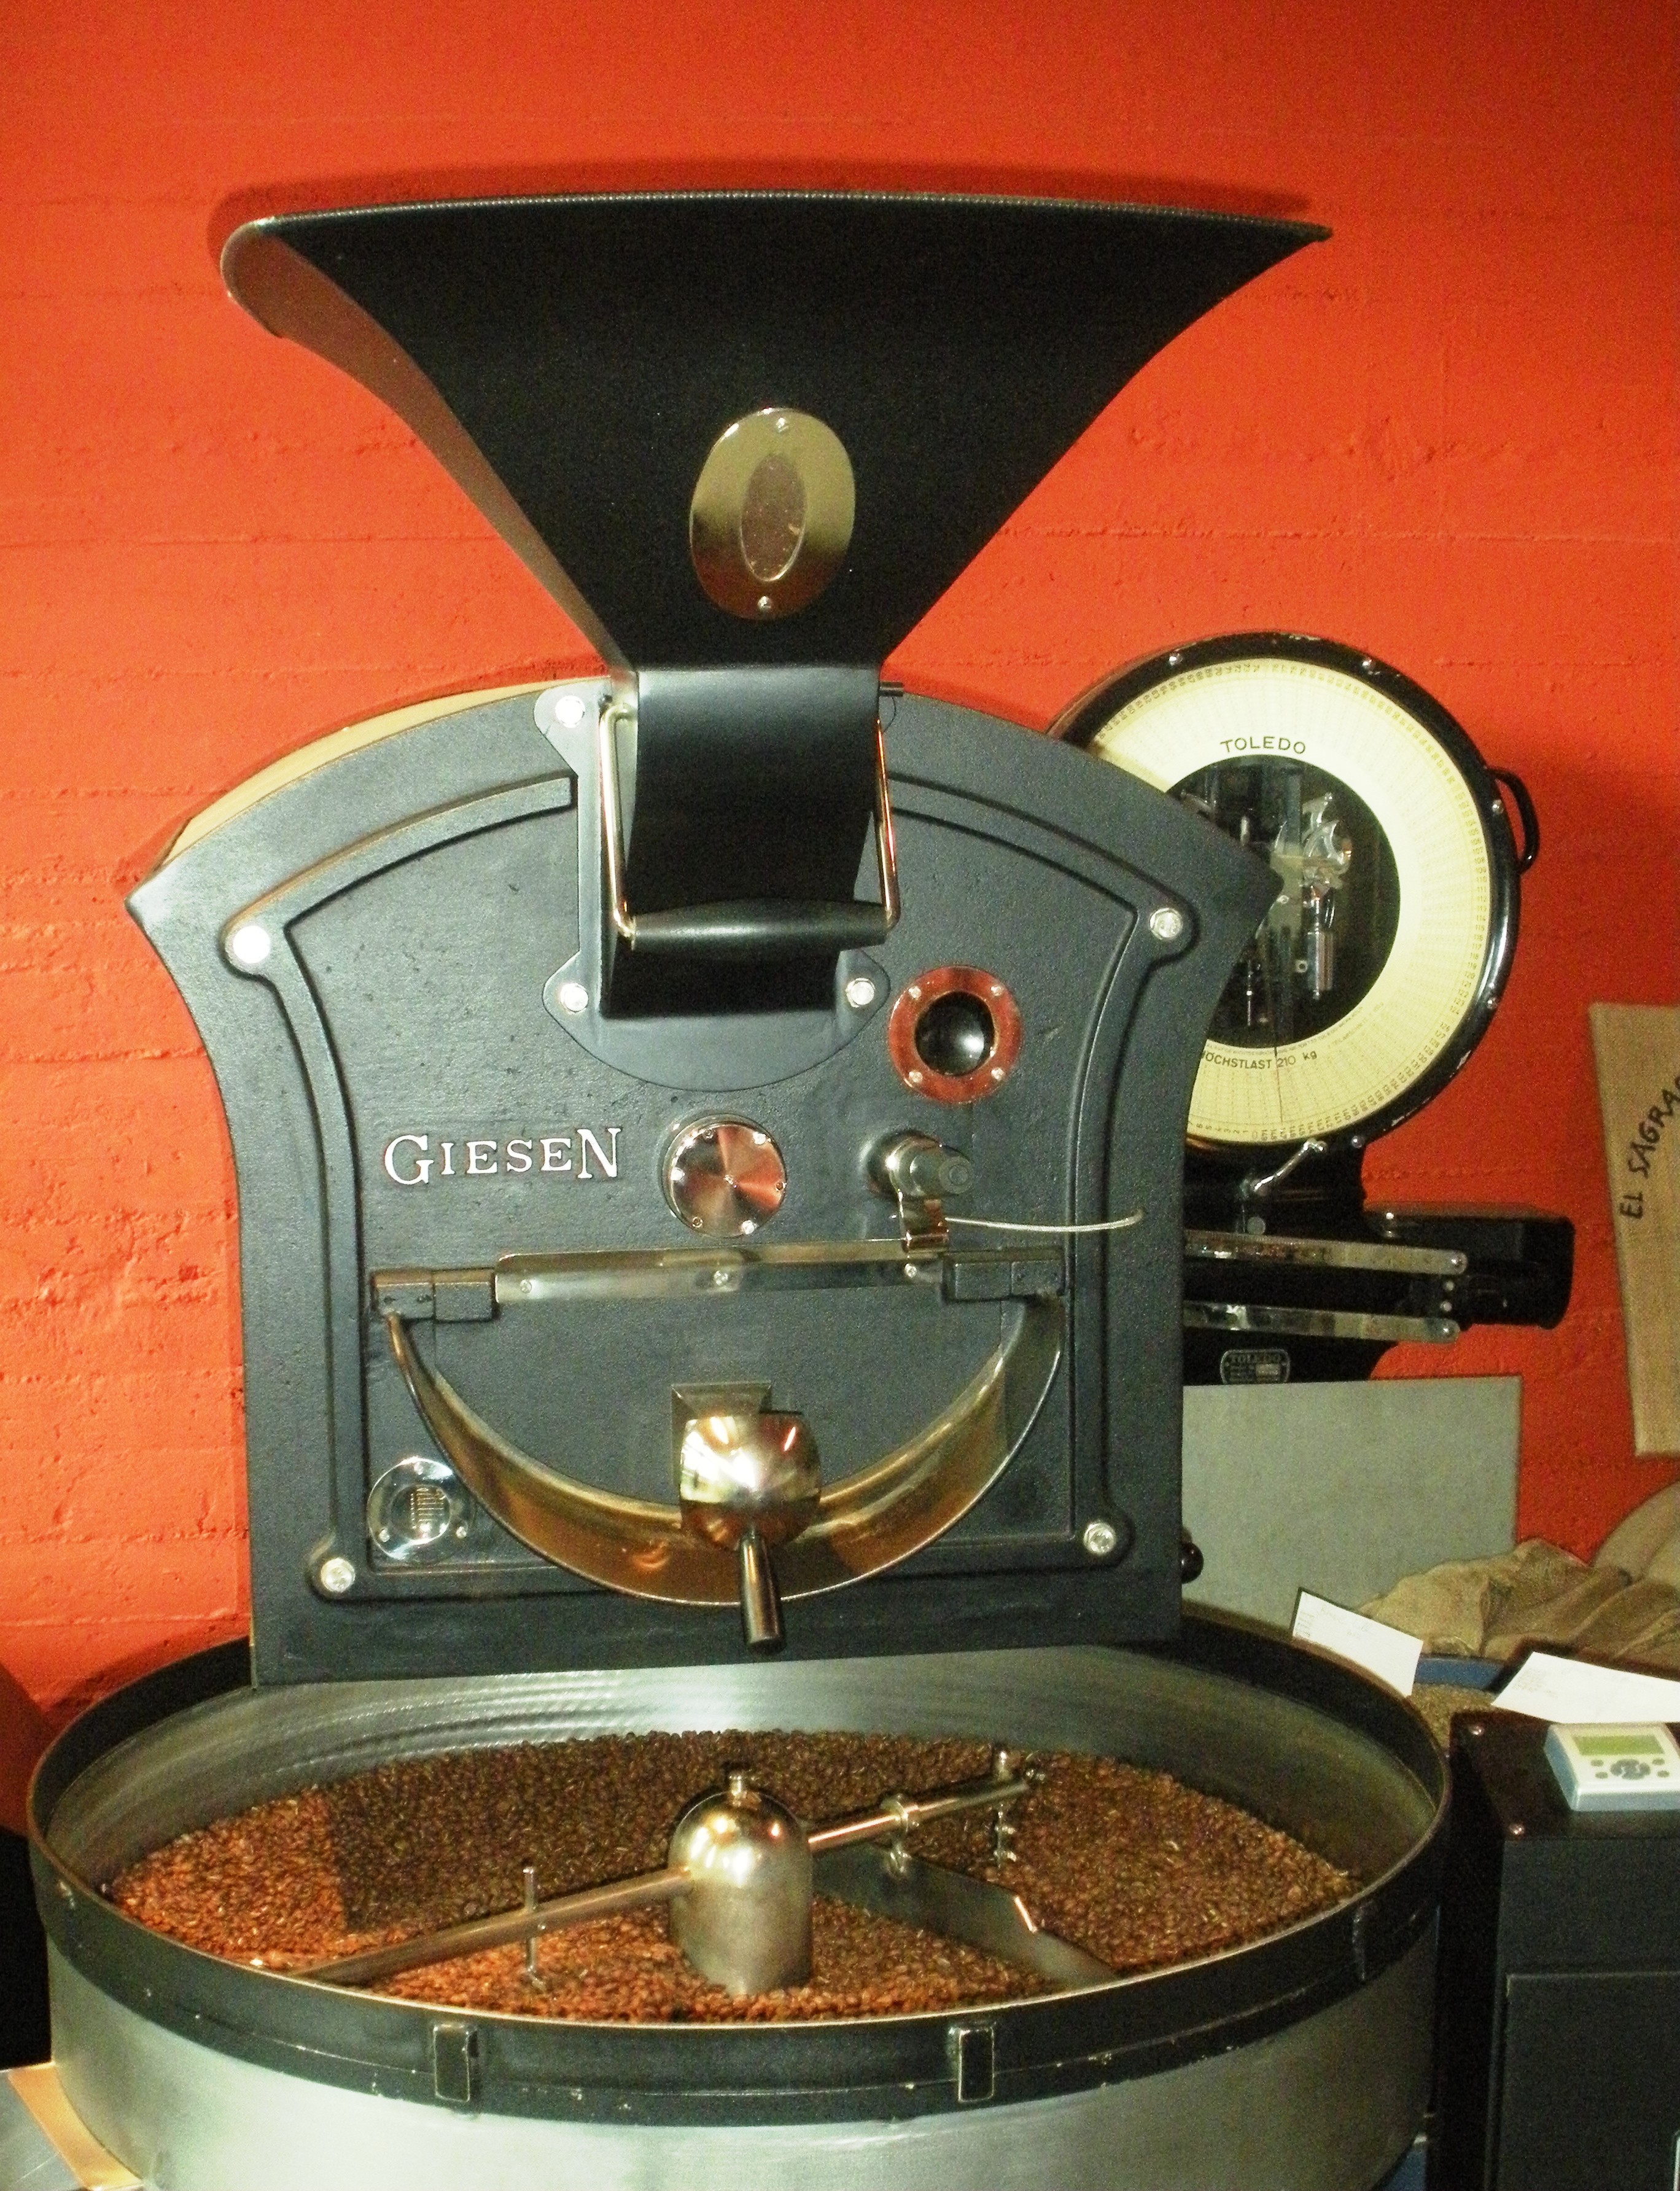 File:Coffee Roasting Machine.JPG - Wikipedia, the free encyclopedia